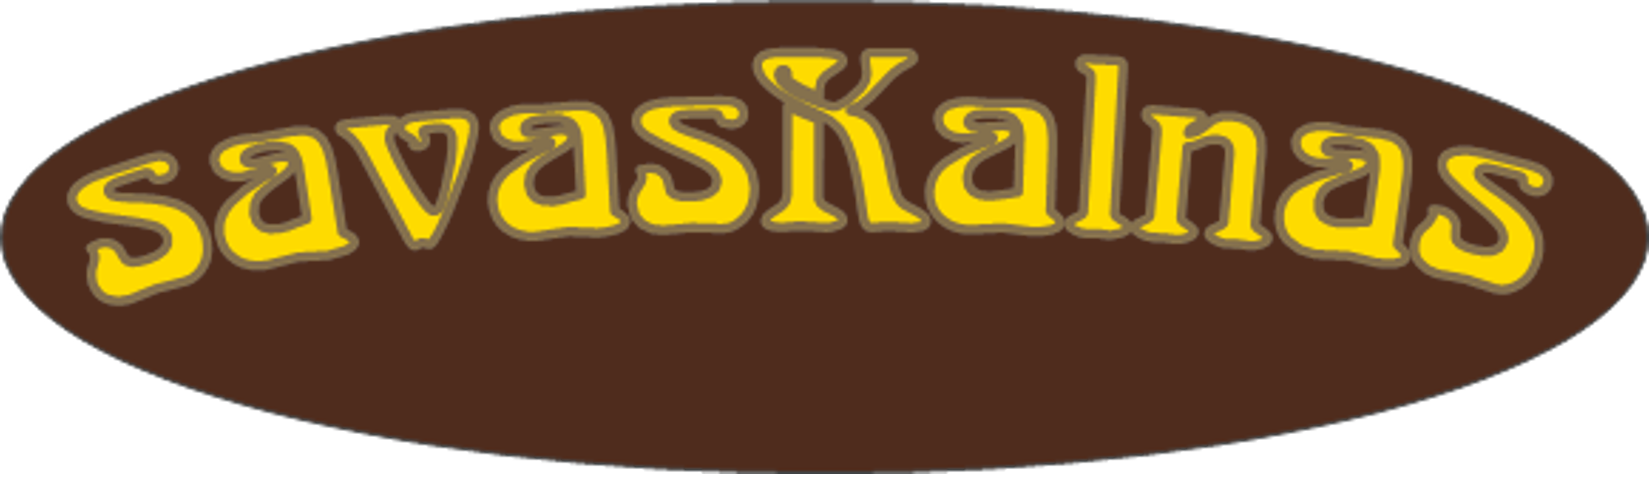 savasKalnas logo